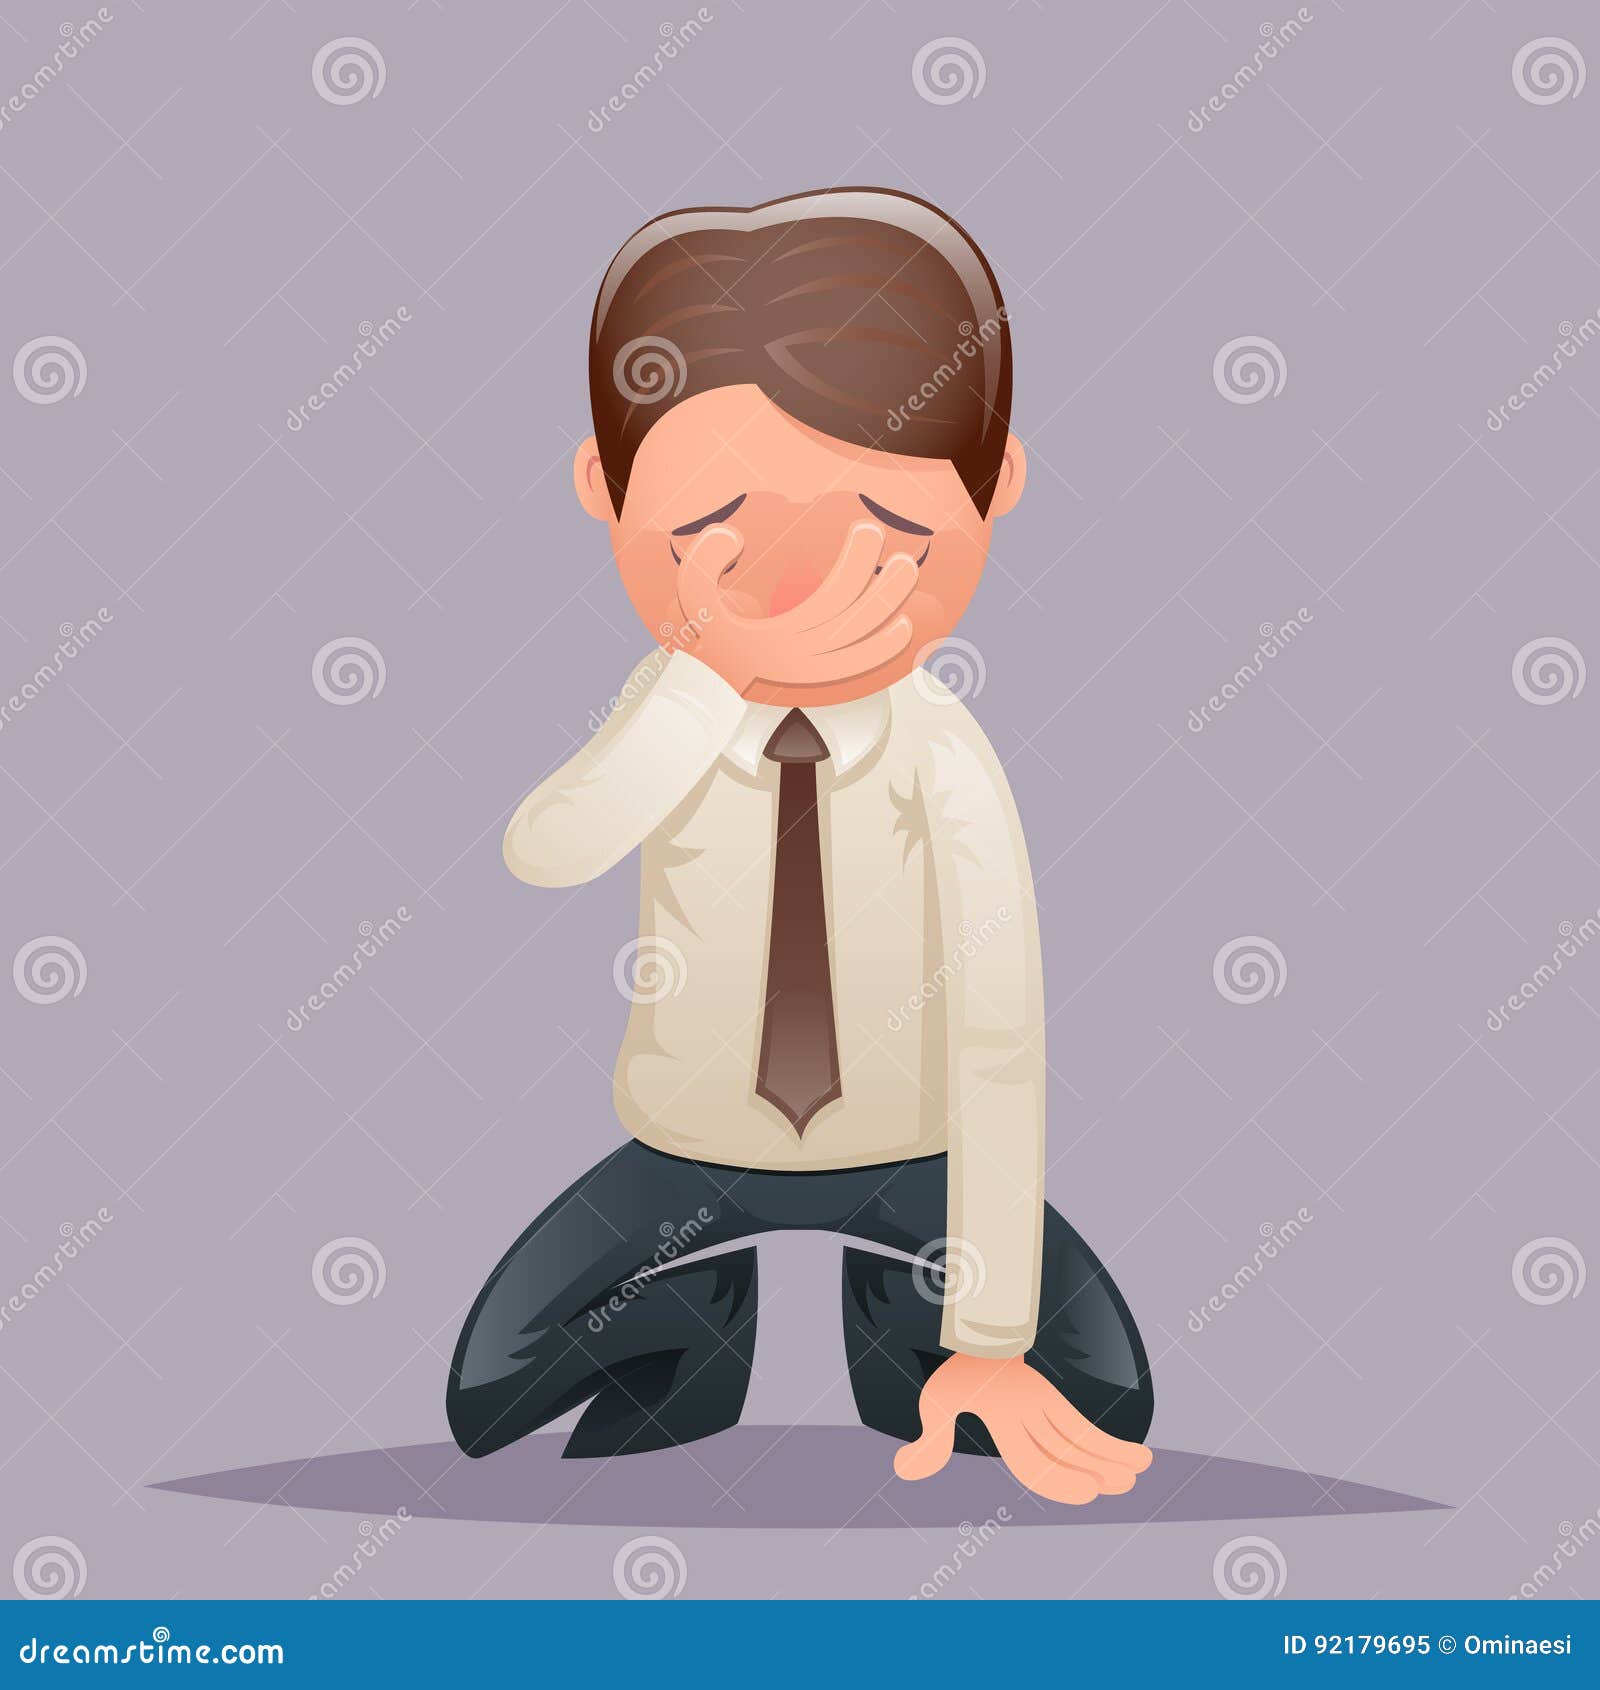 facepalm kneel cry vintage businessman despair regret suffer grief character icon on stylish background retro cartoon